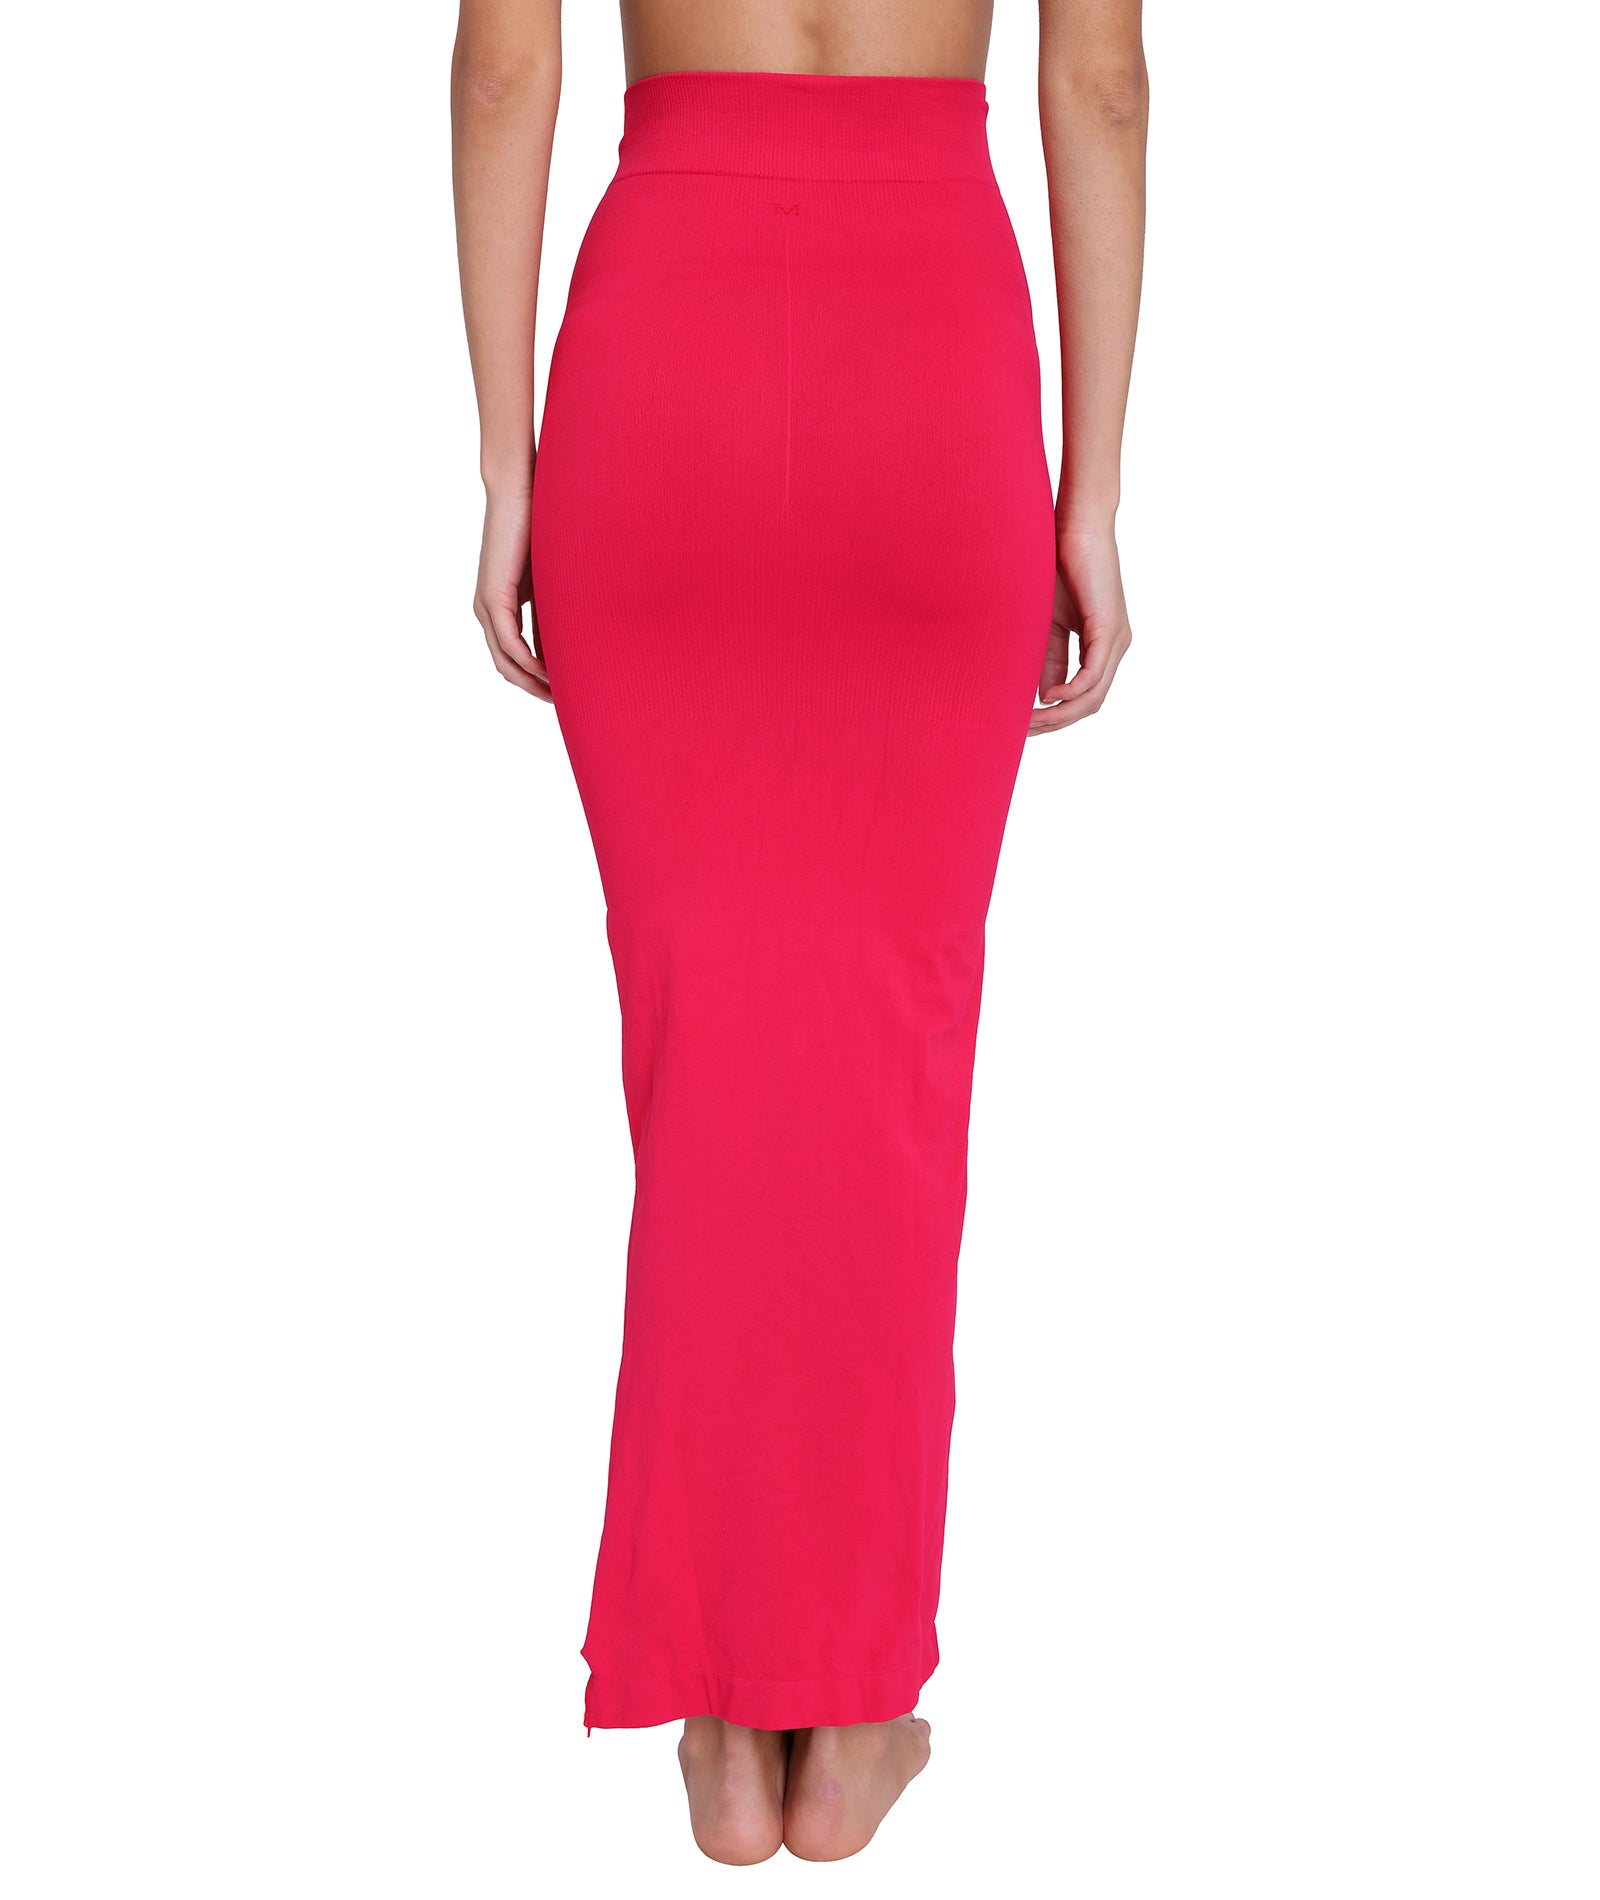 Red Rose Micro Fiber Solid Saree Skirt/Saree Shaper/Saree Shapewear for Women